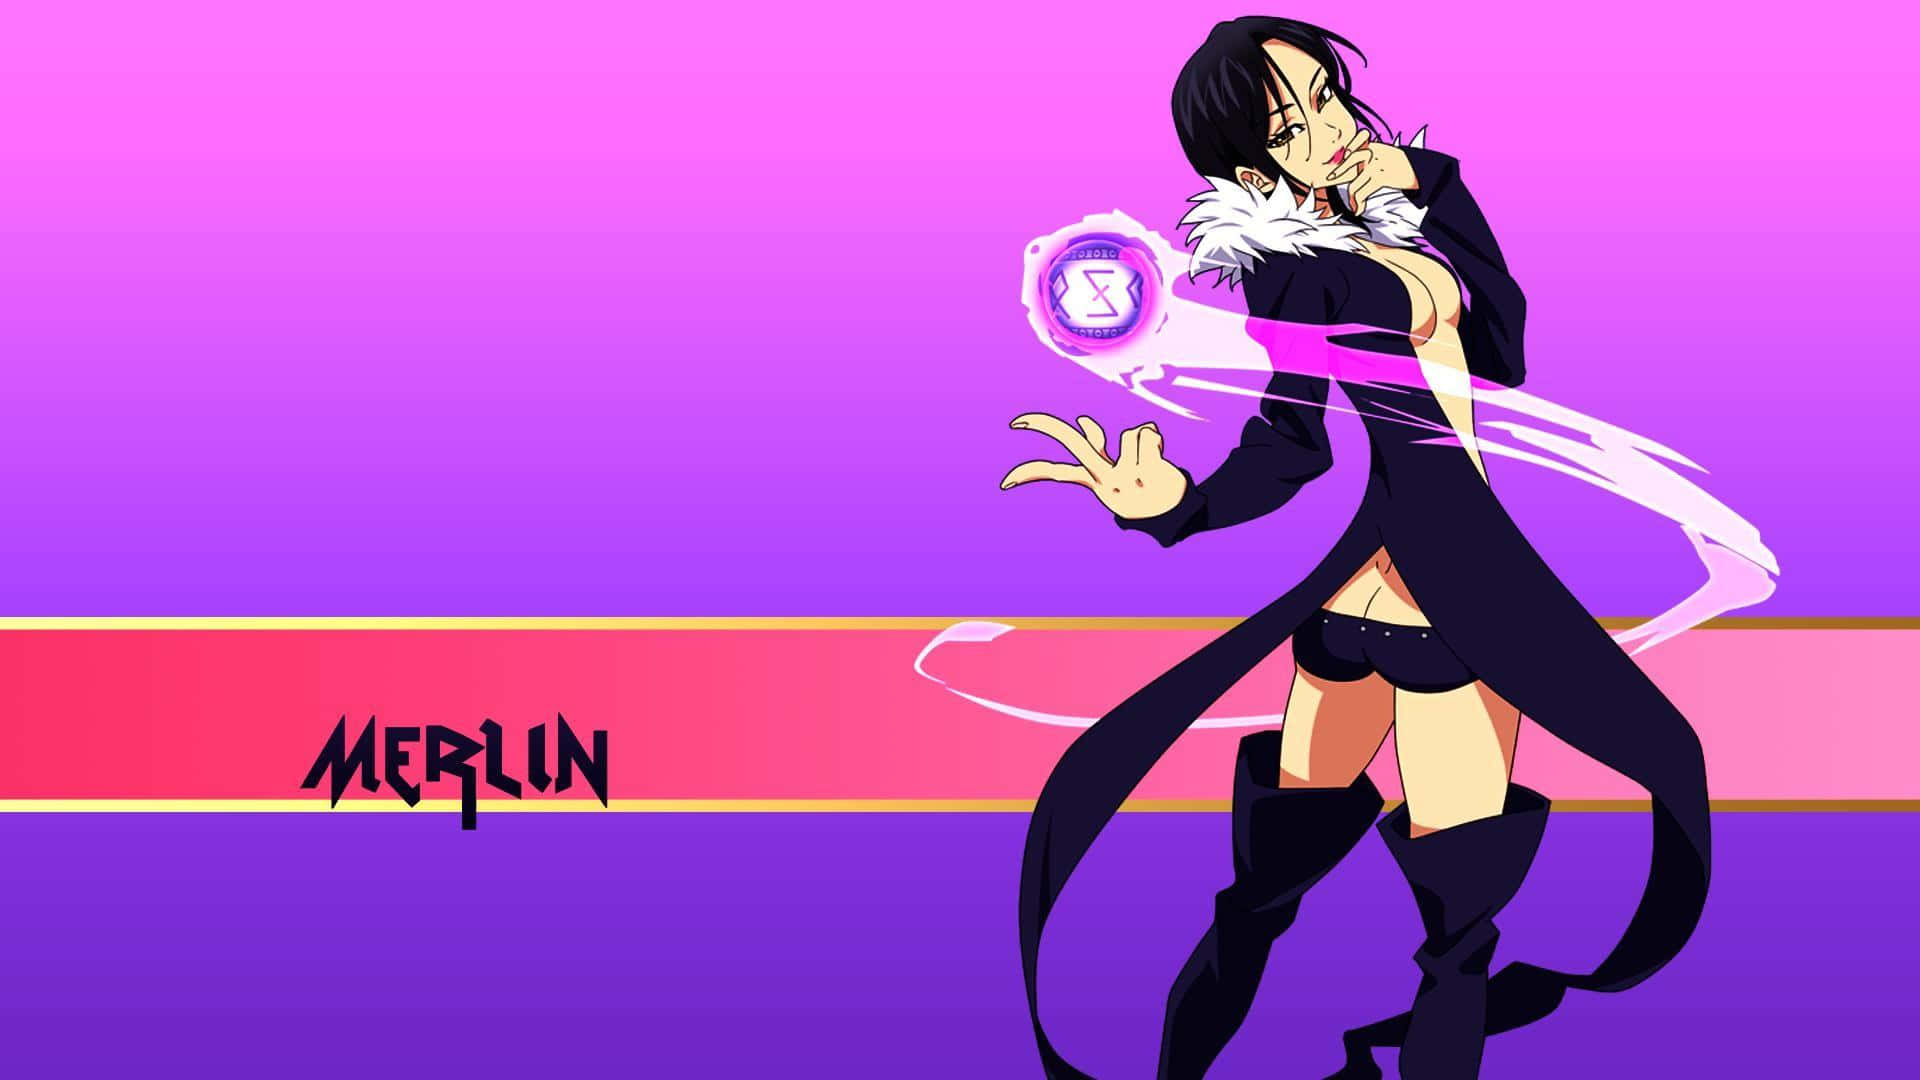 Drew Merlin from Seven Deadly Sins : r/anime